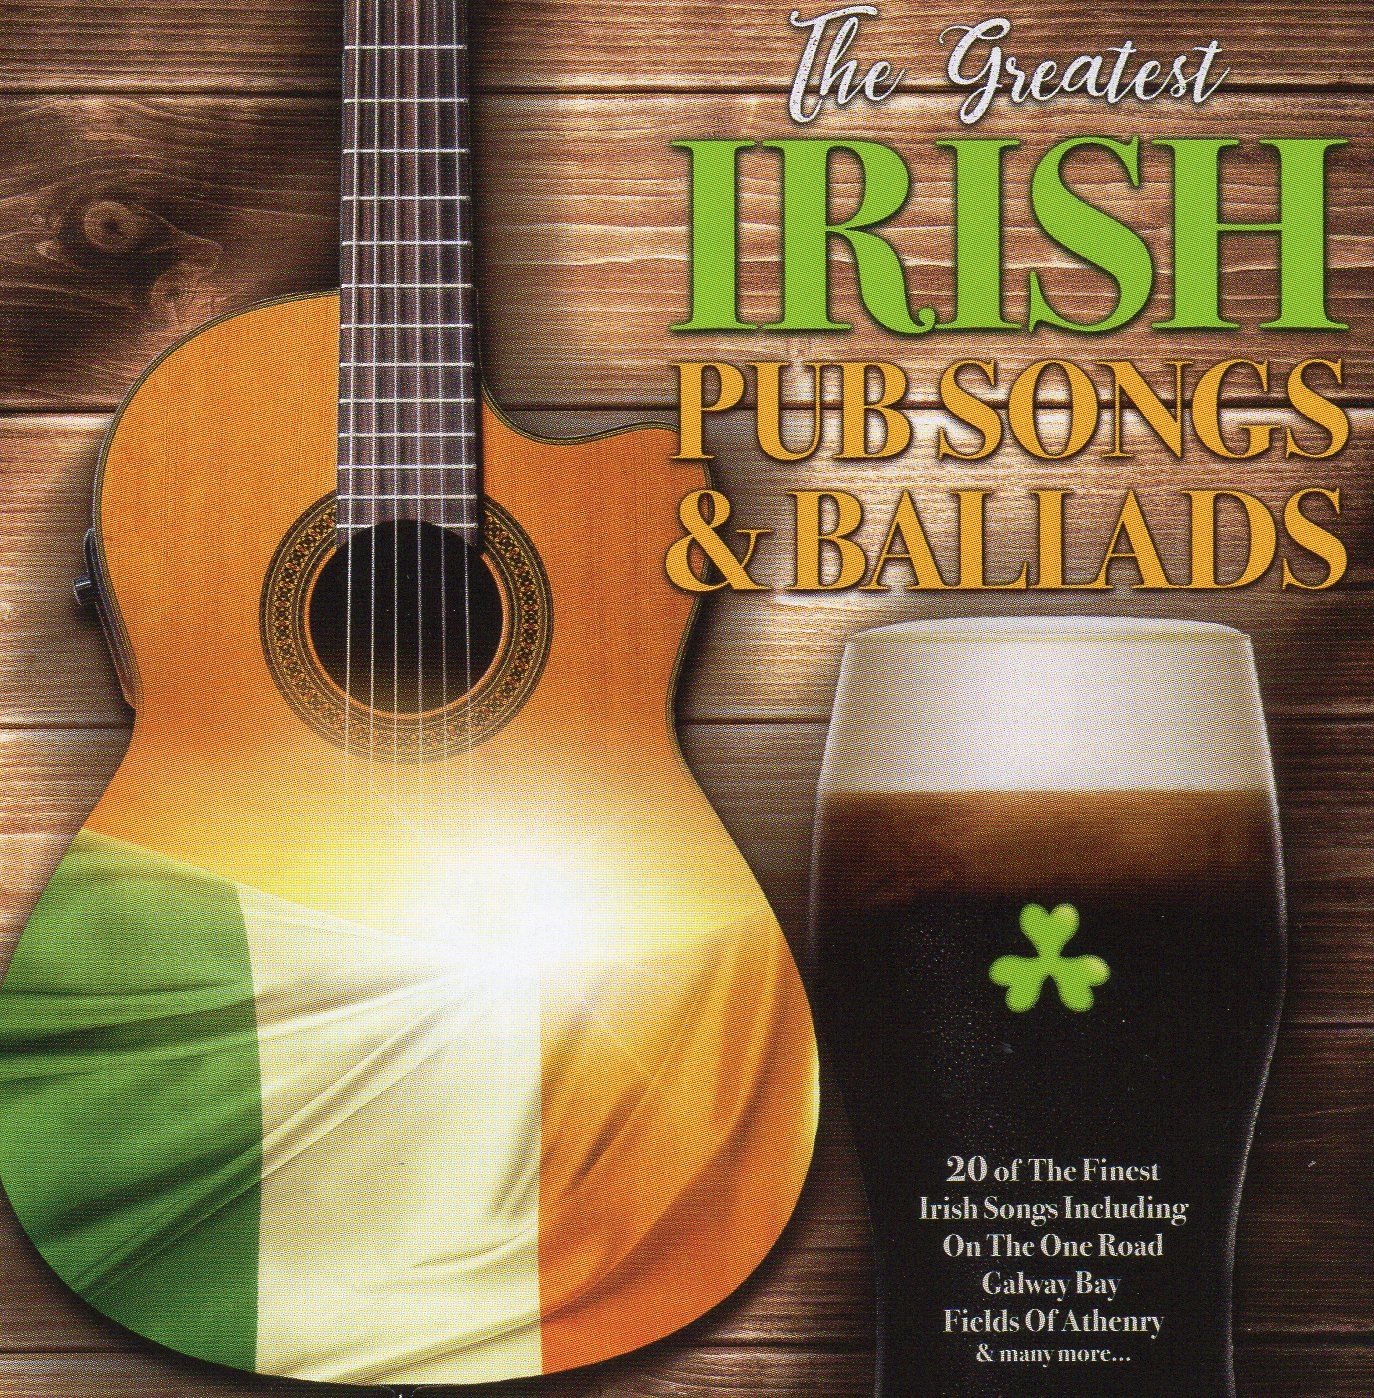 most famous irish pub songs